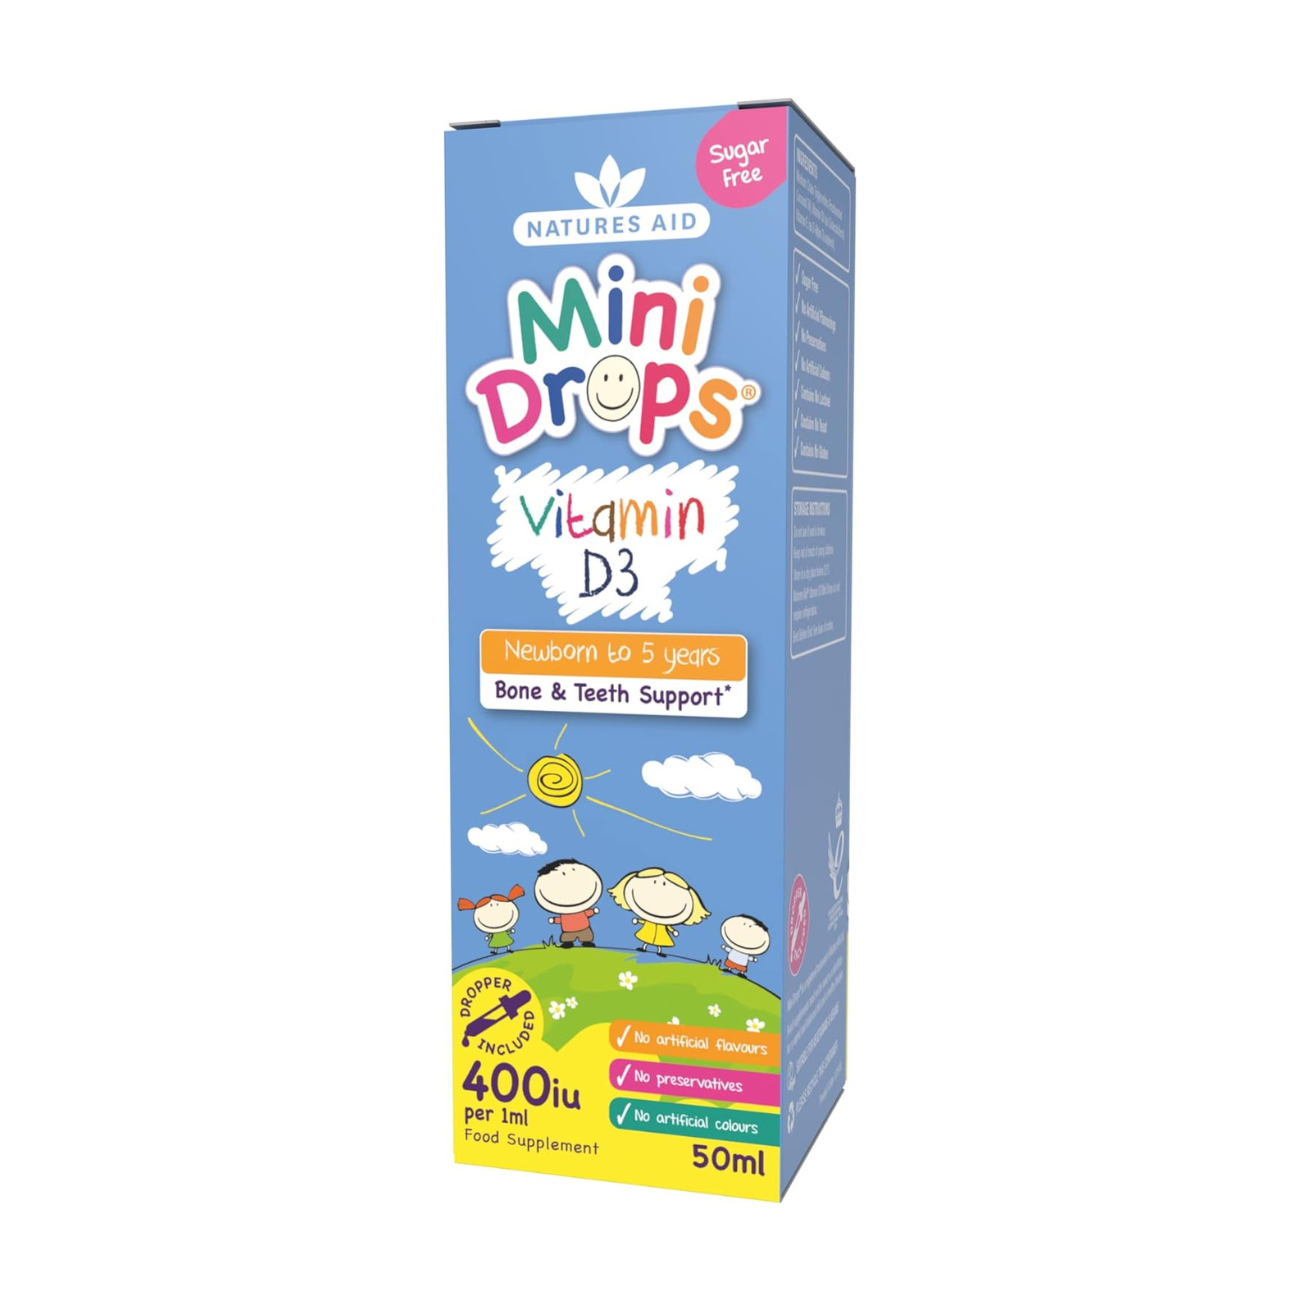 Vitamin D3 400iu Drops for Infants & Children Healthy Teeth & Bones 50ml